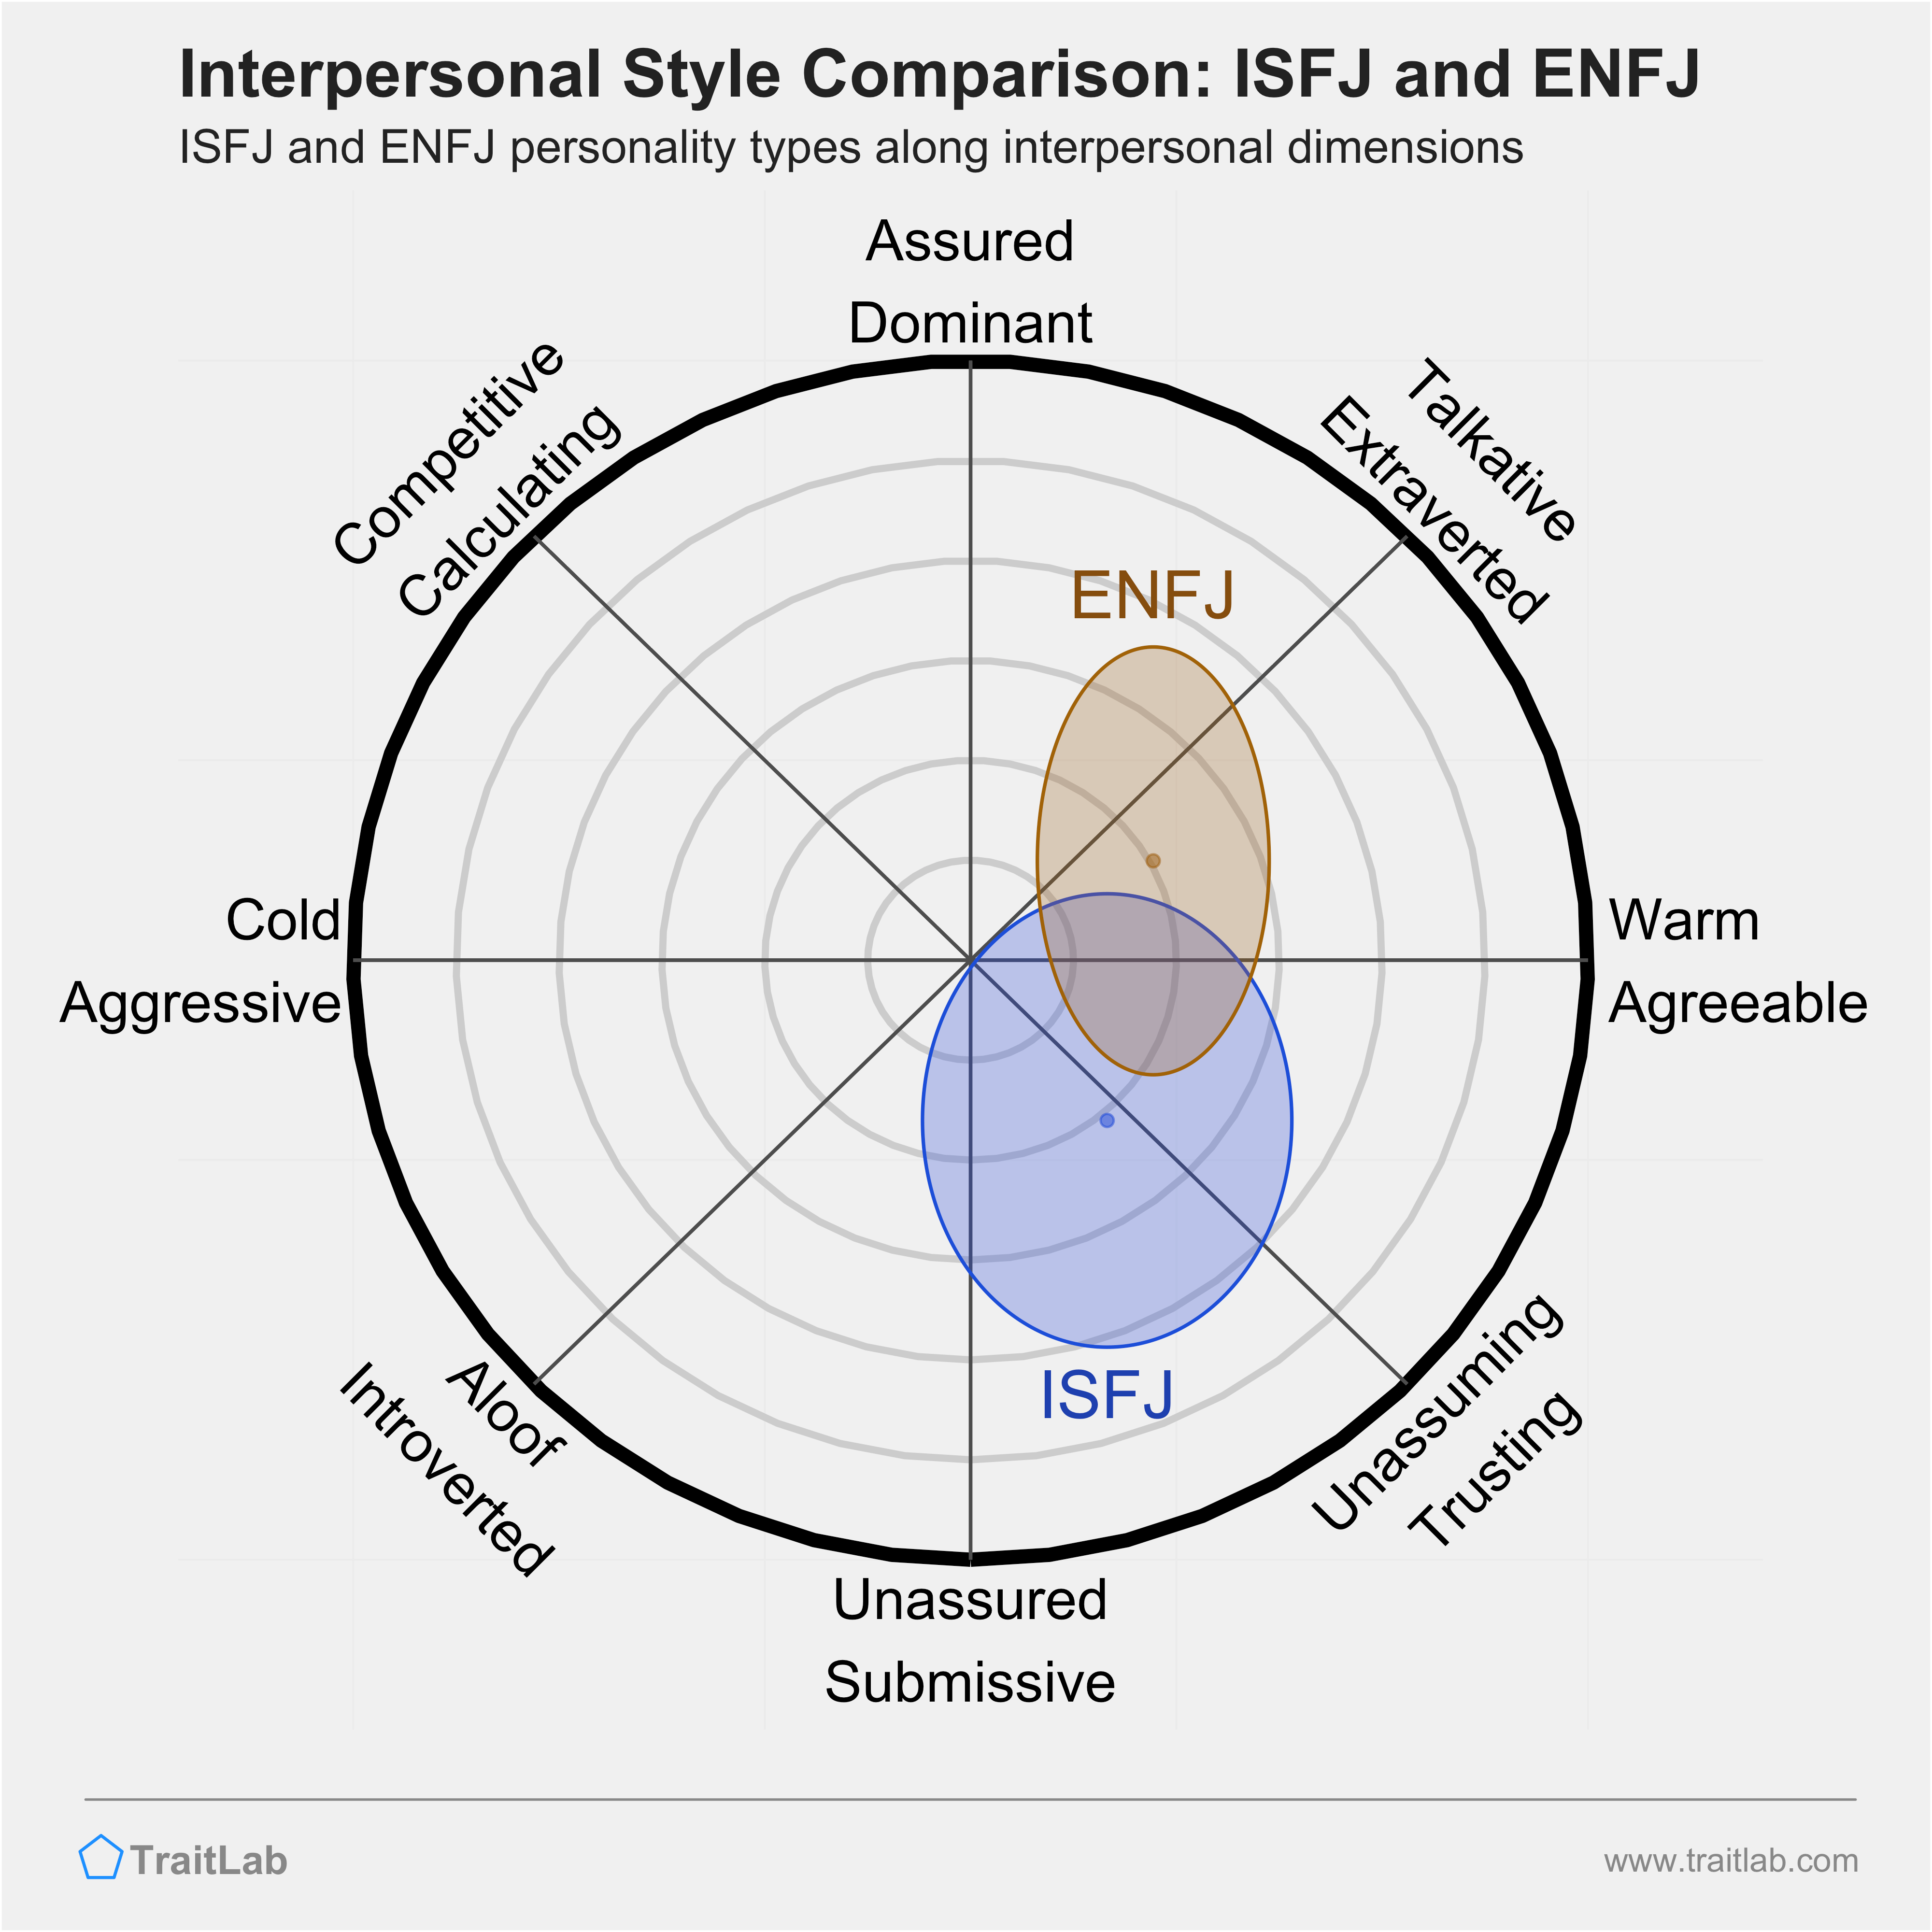 ISFJ and ENFJ comparison across interpersonal dimensions